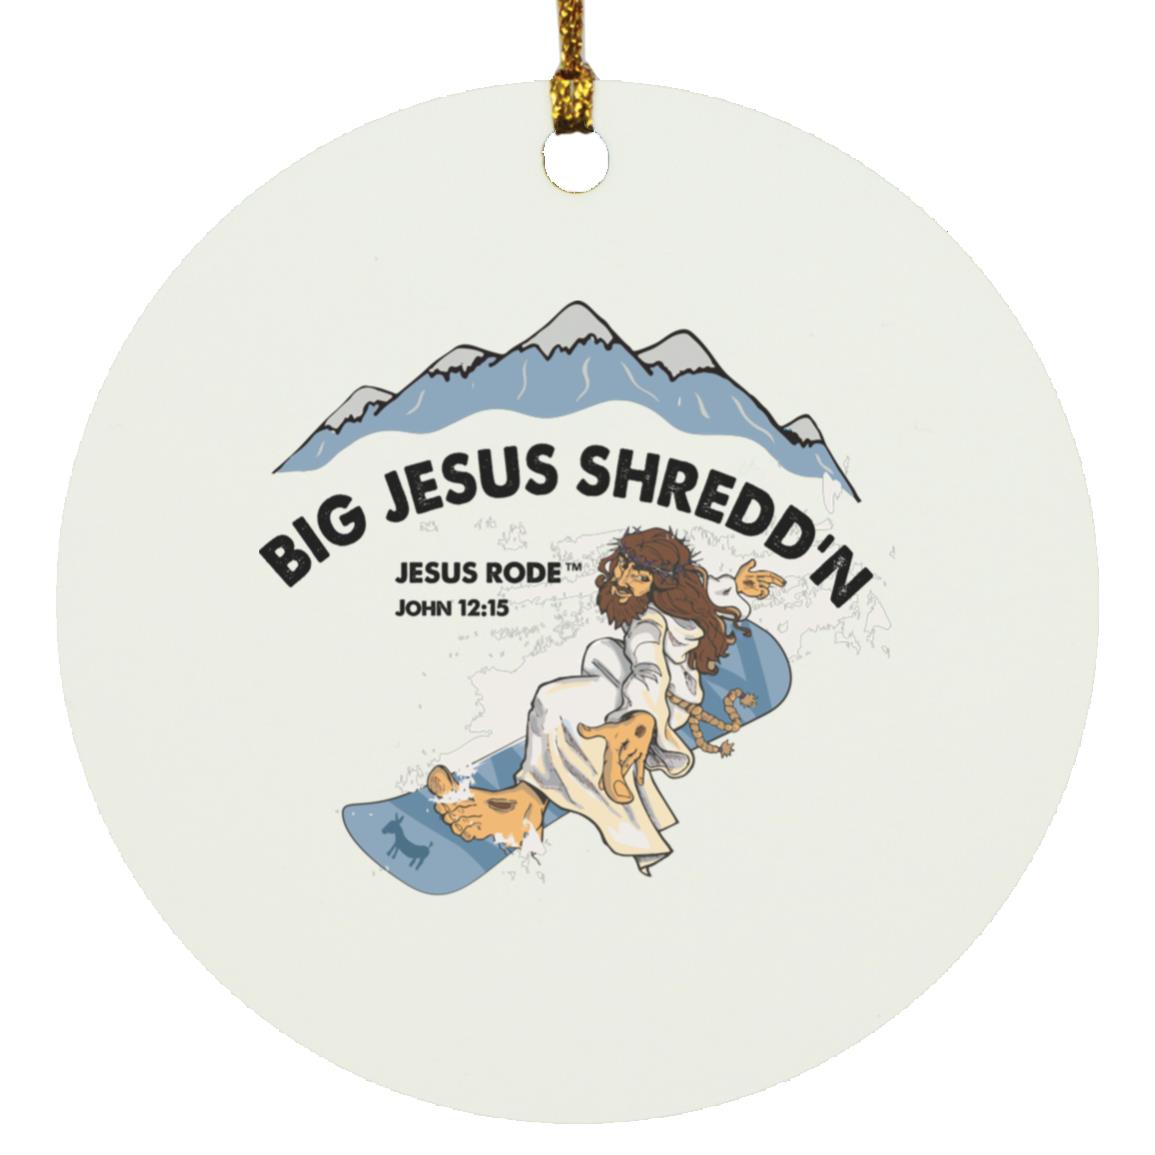 Big Jesus Shredd'n Circle Ornament